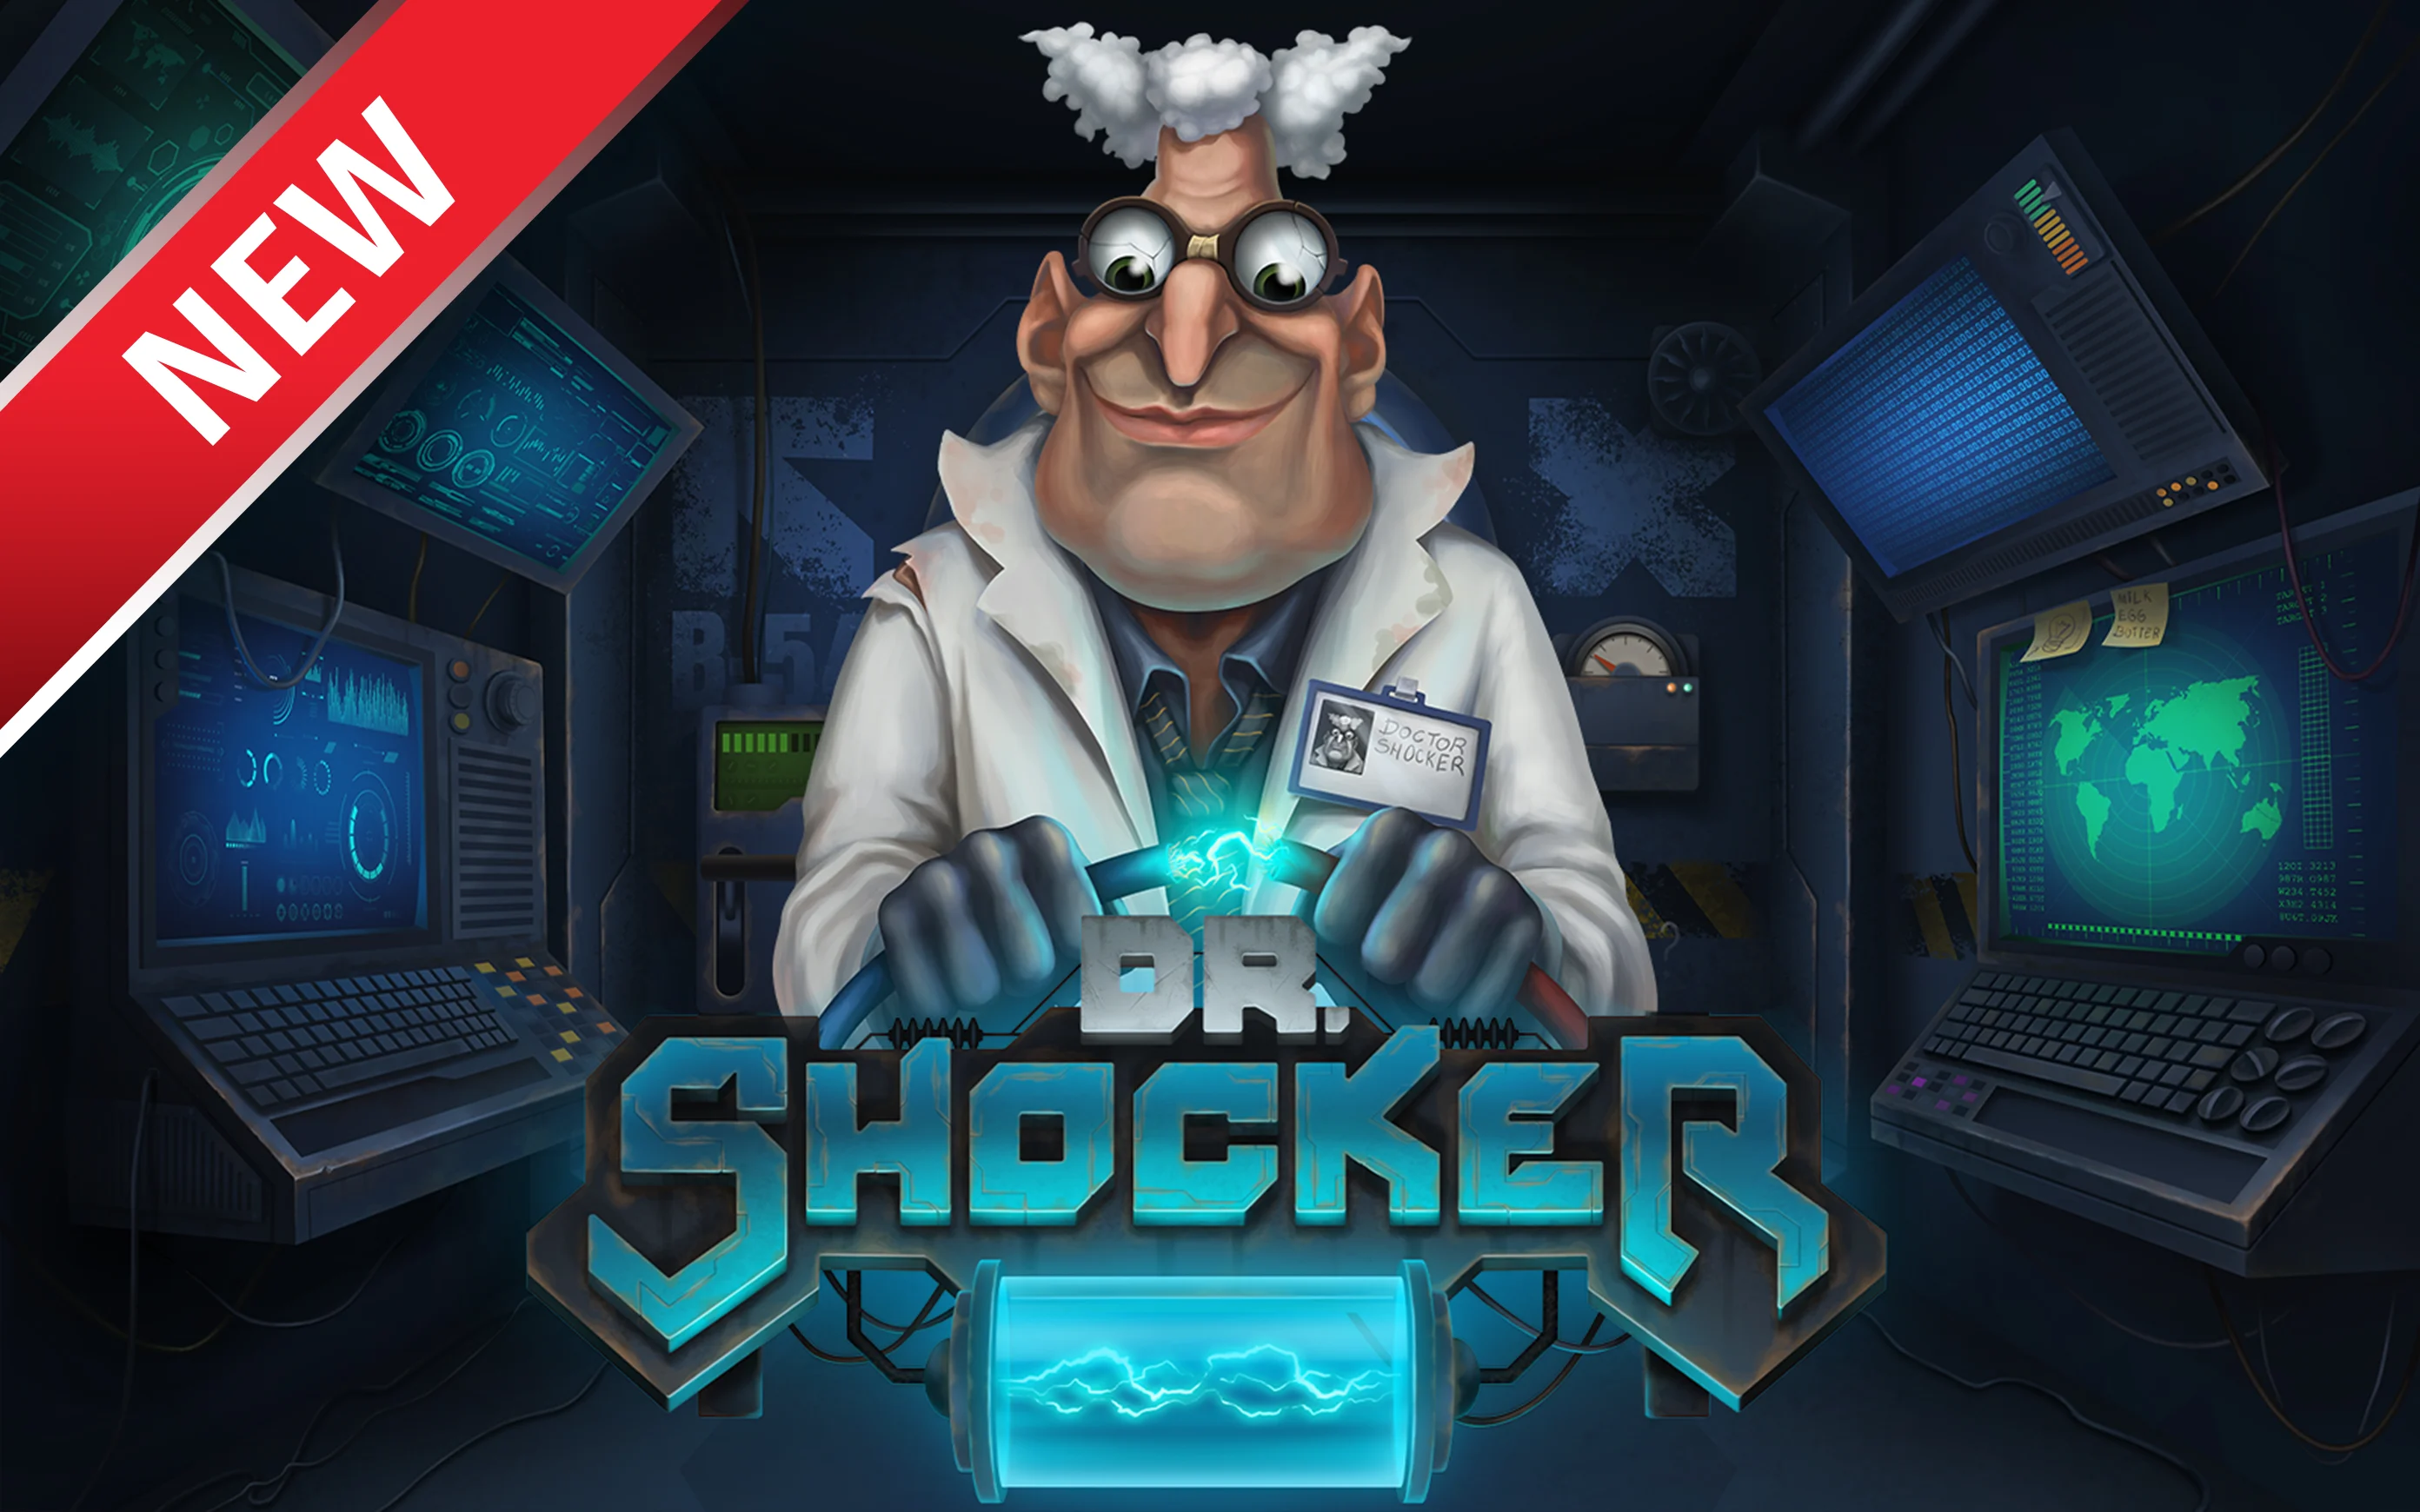 Joacă Dr. Shocker în cazinoul online Starcasino.be